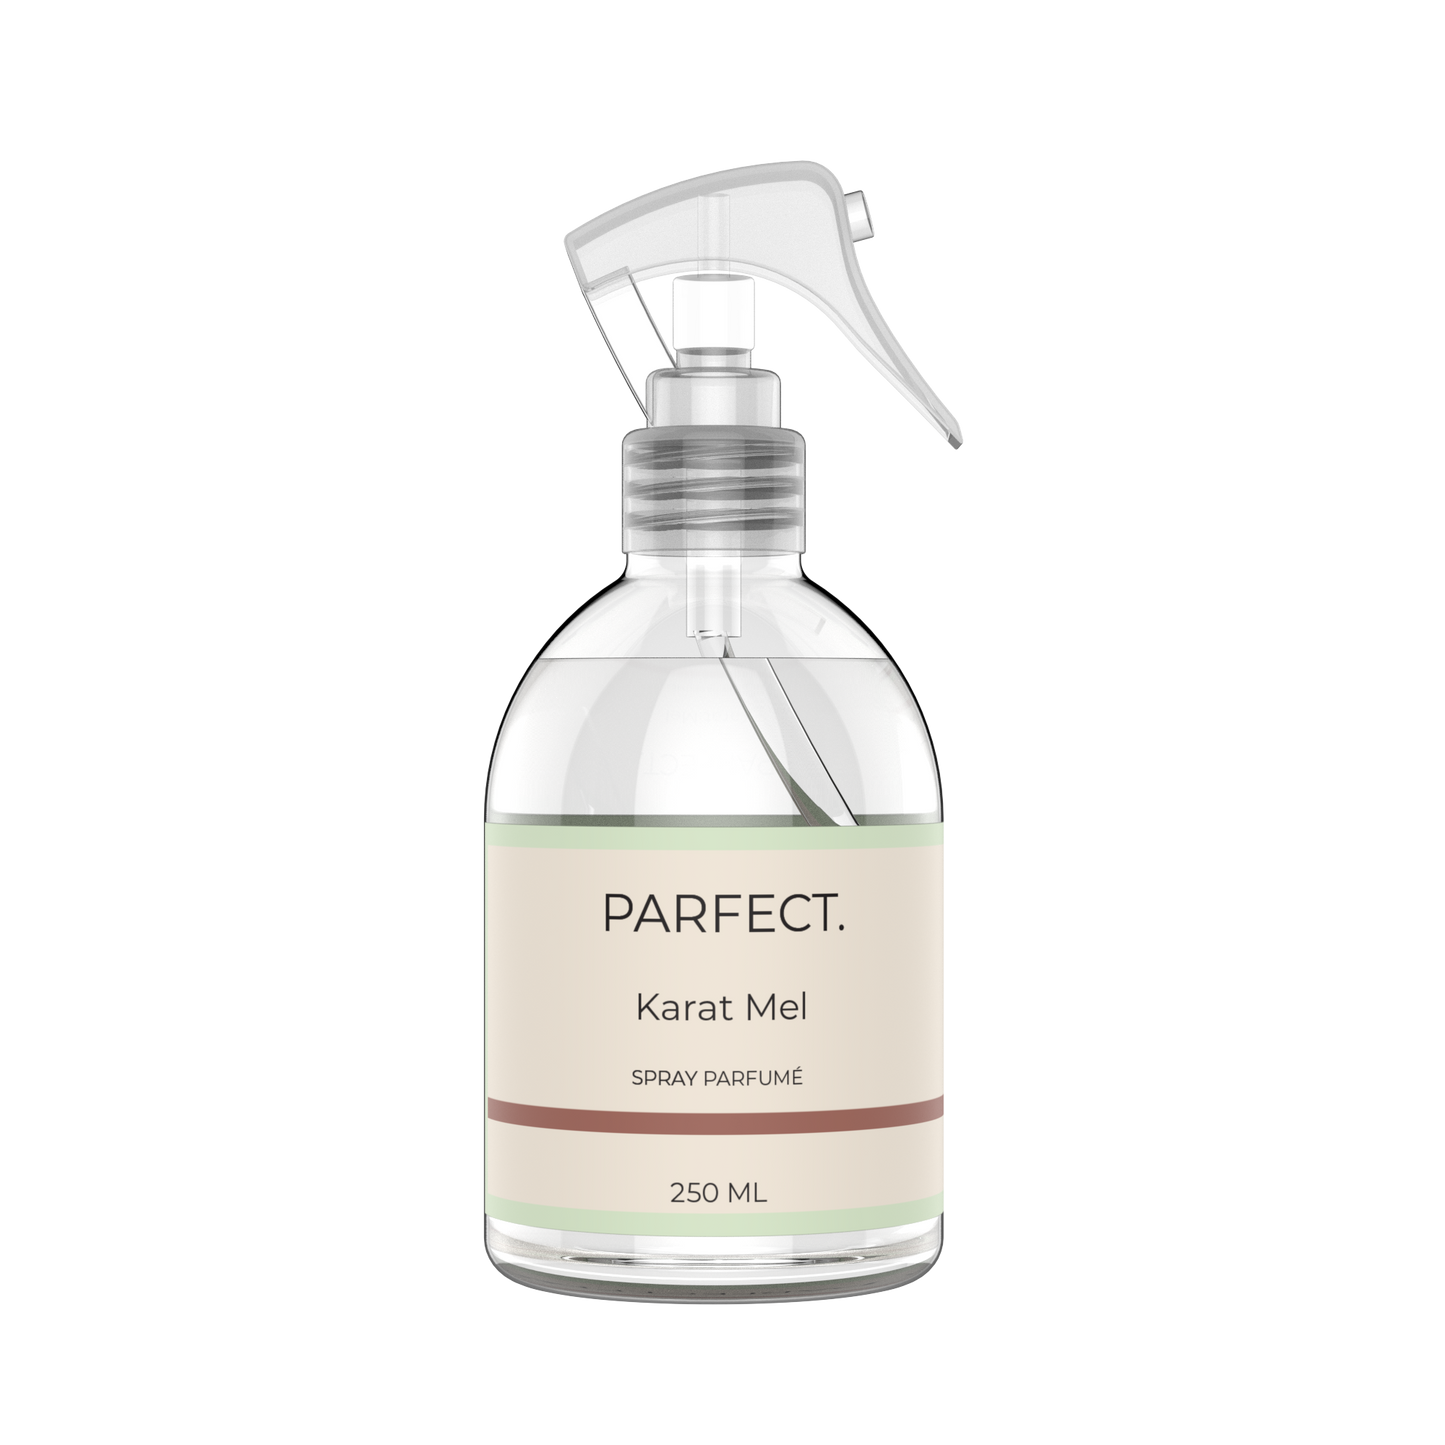 Parfect - Parfumerie Mirage - Parfums et sprays orientaux - Spray/Parfum d'intérieur Karat Mel - Caramel